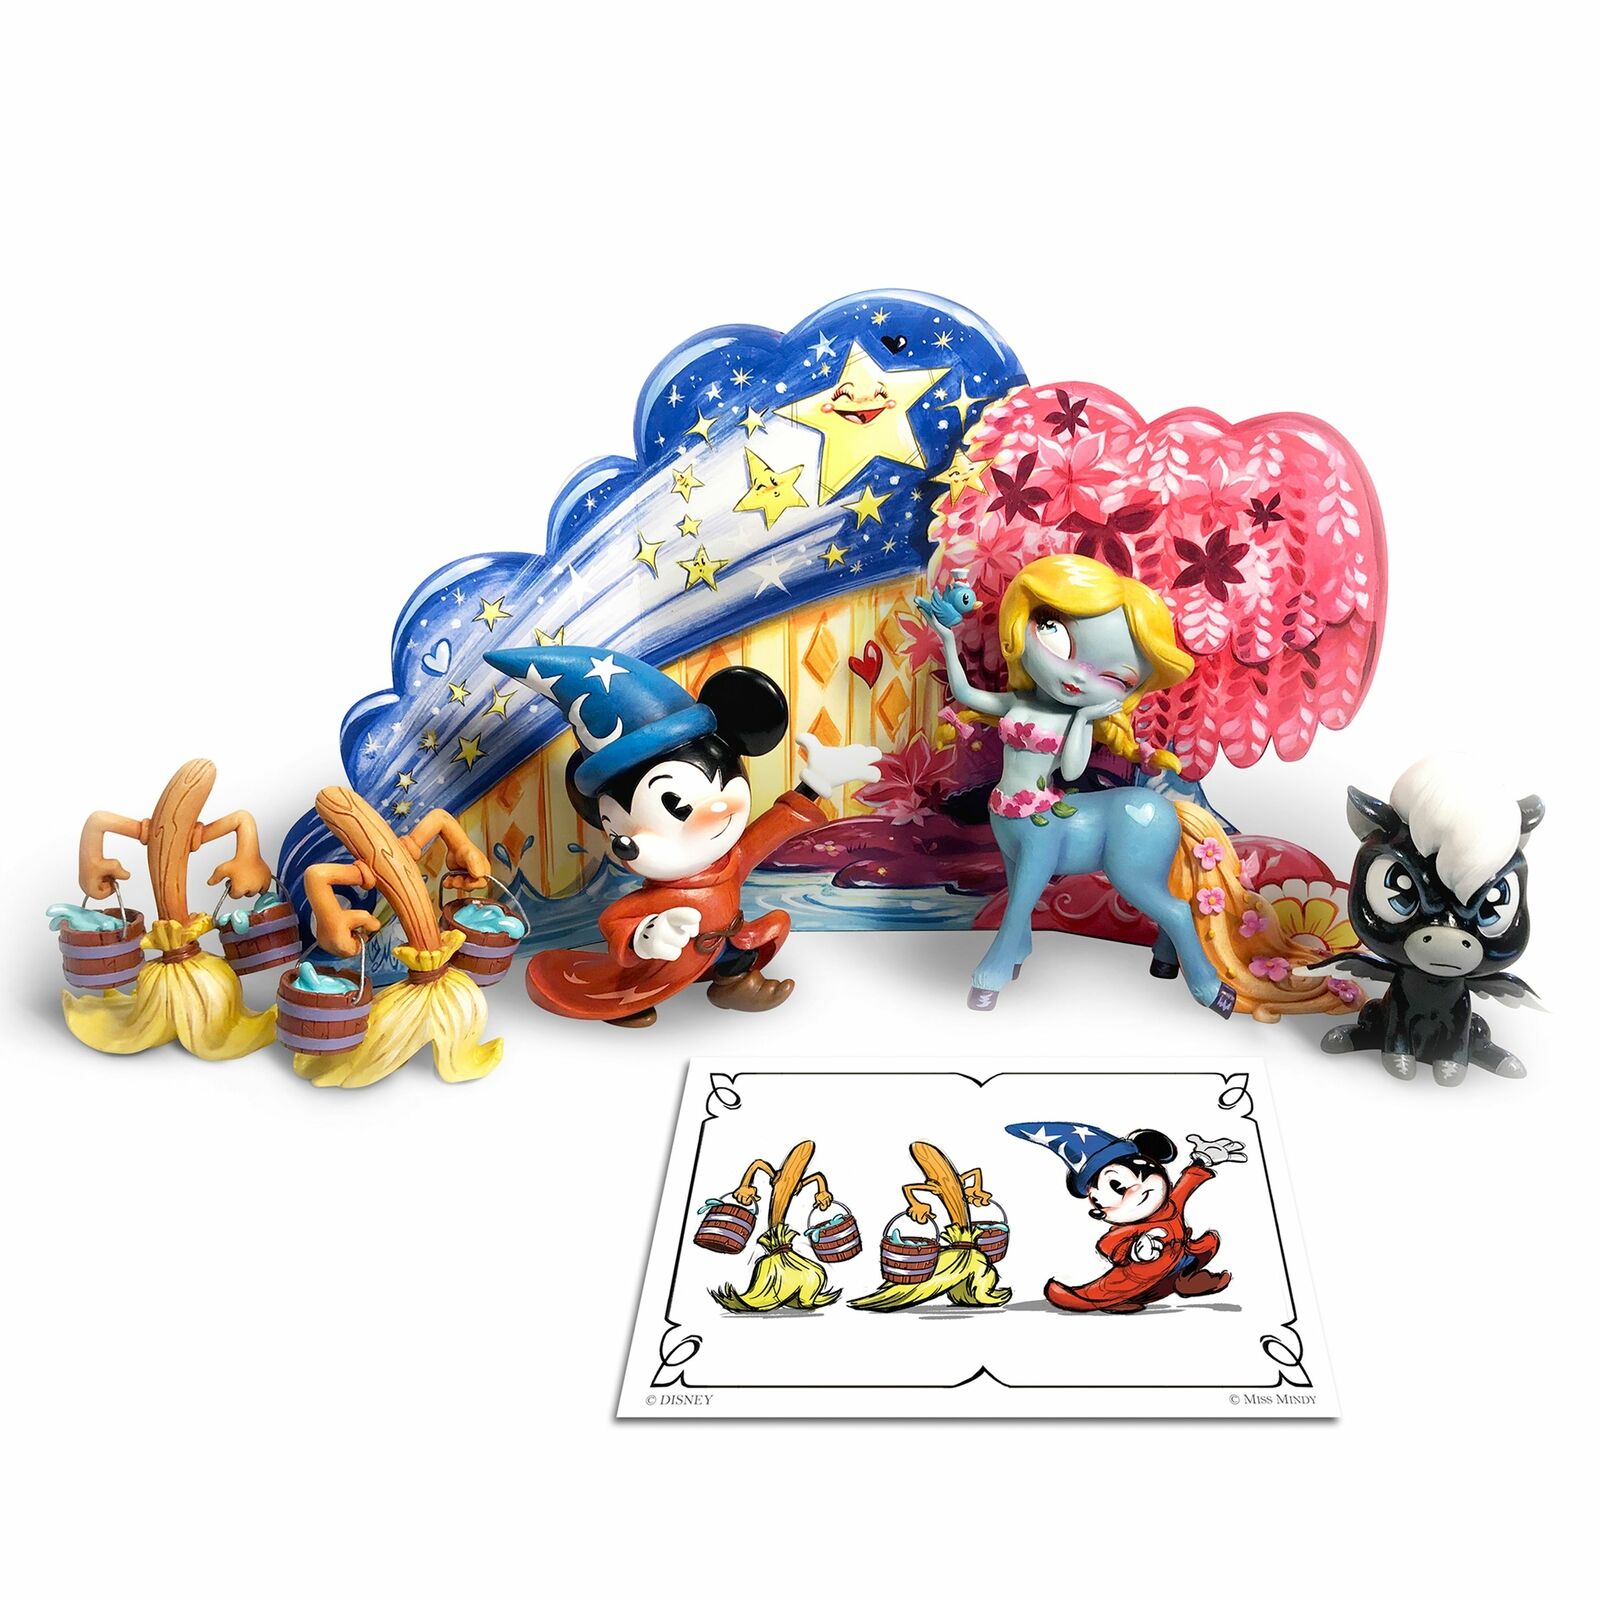 Enesco World of Miss Mindy Disney Fantasia Limited Edition Figurine Set